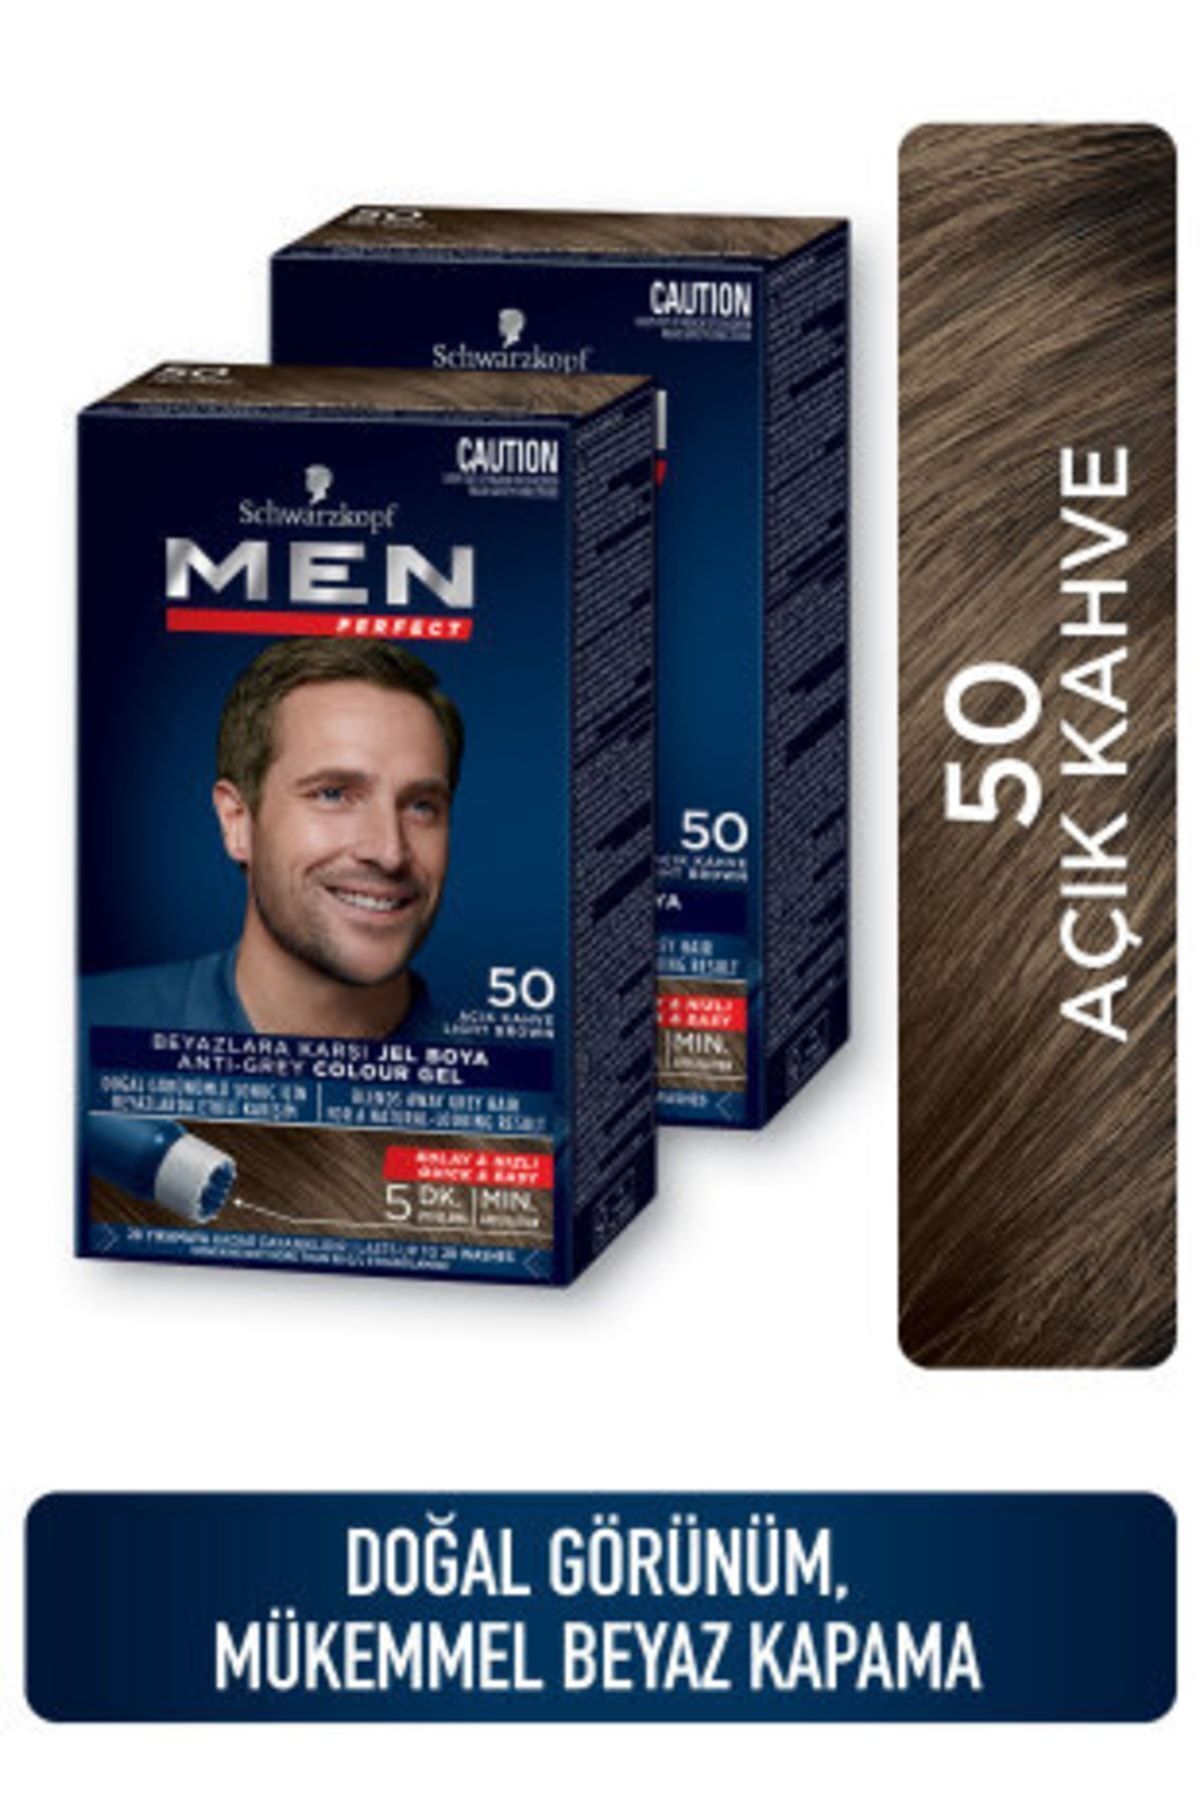 Men Perfect Schwarzkopf Saç Boyası 50 - Açık Kahve X 2 Adet